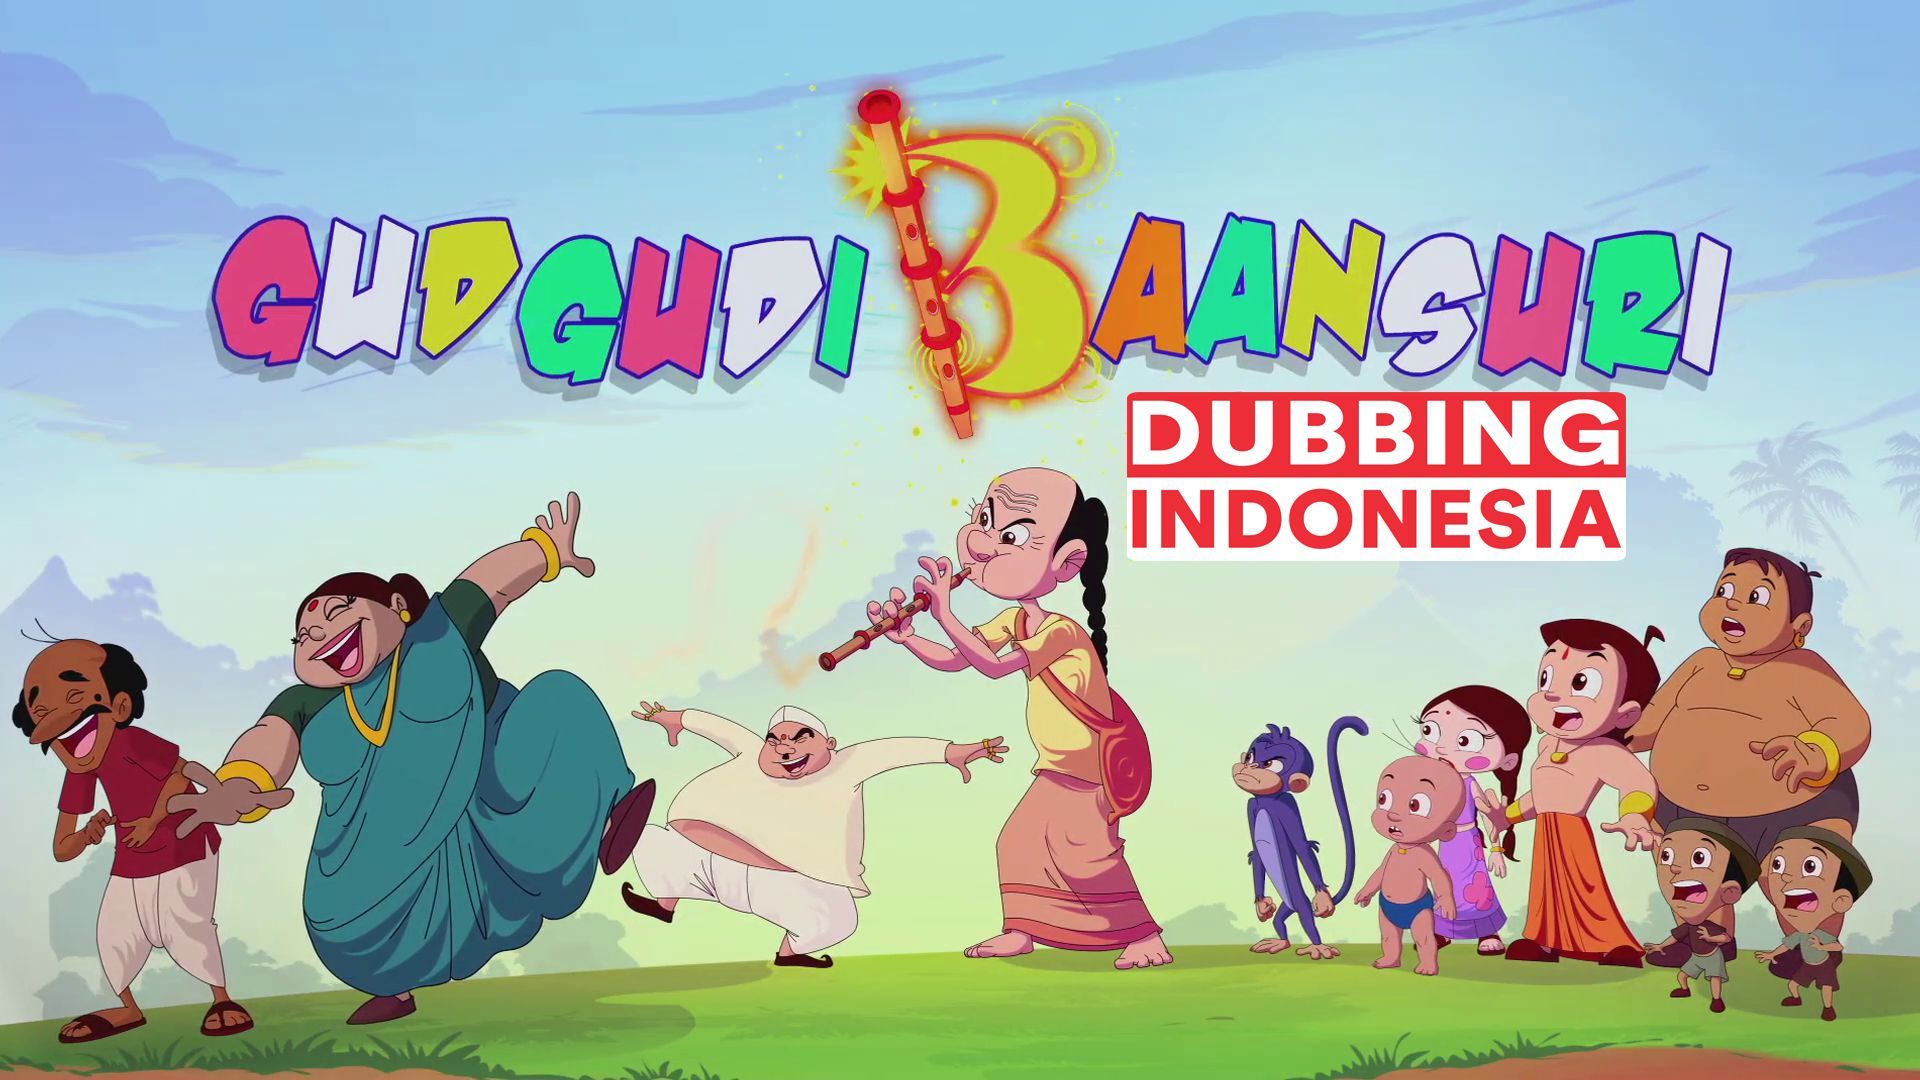 Chhota Bheem - Gudgudi Baansuri [Dubbing Indonesia] - Bilibili